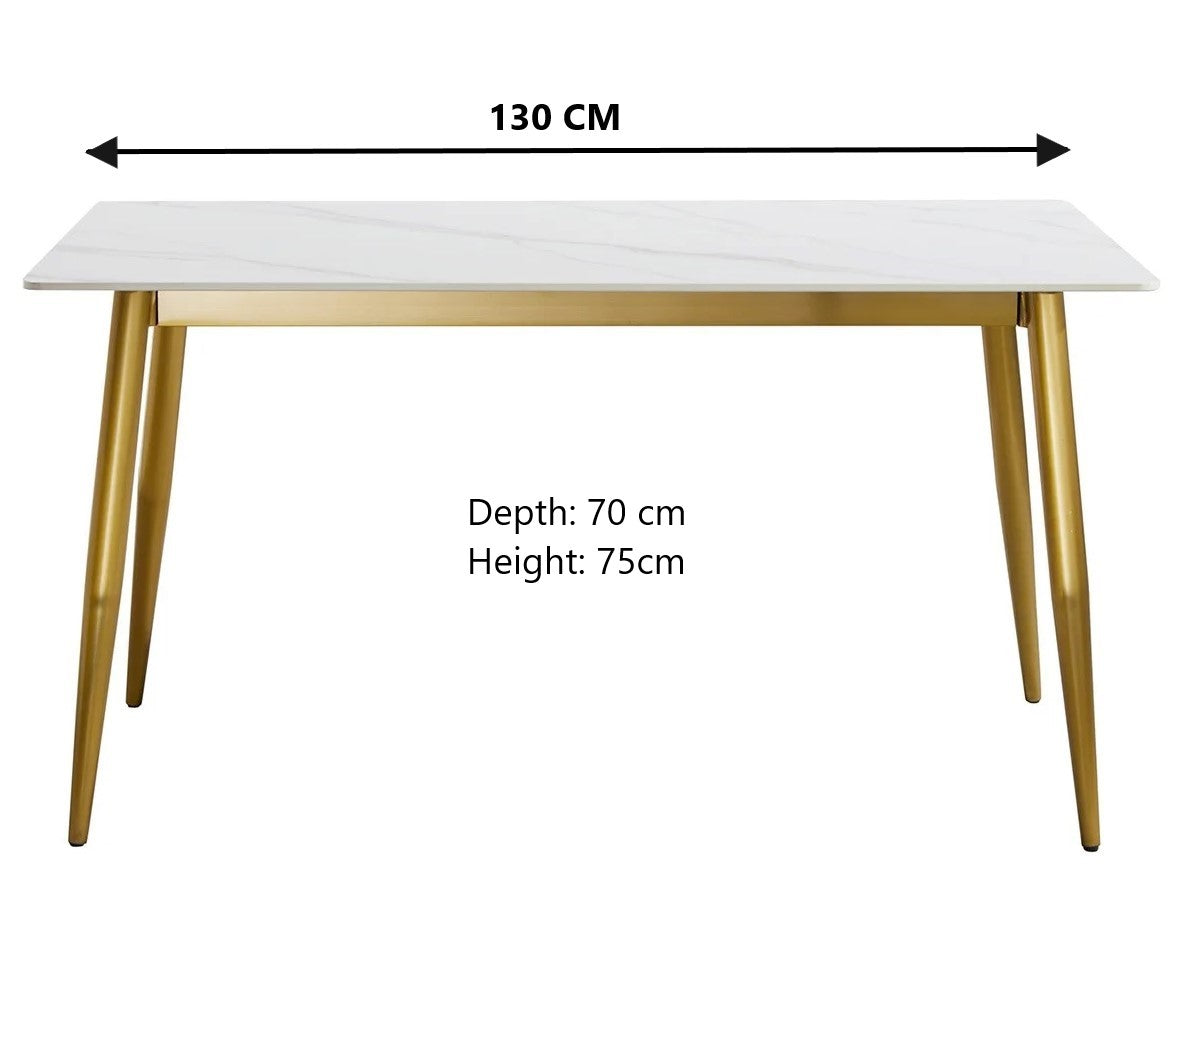 Tecia Sintered Stone Dining Table,130cm